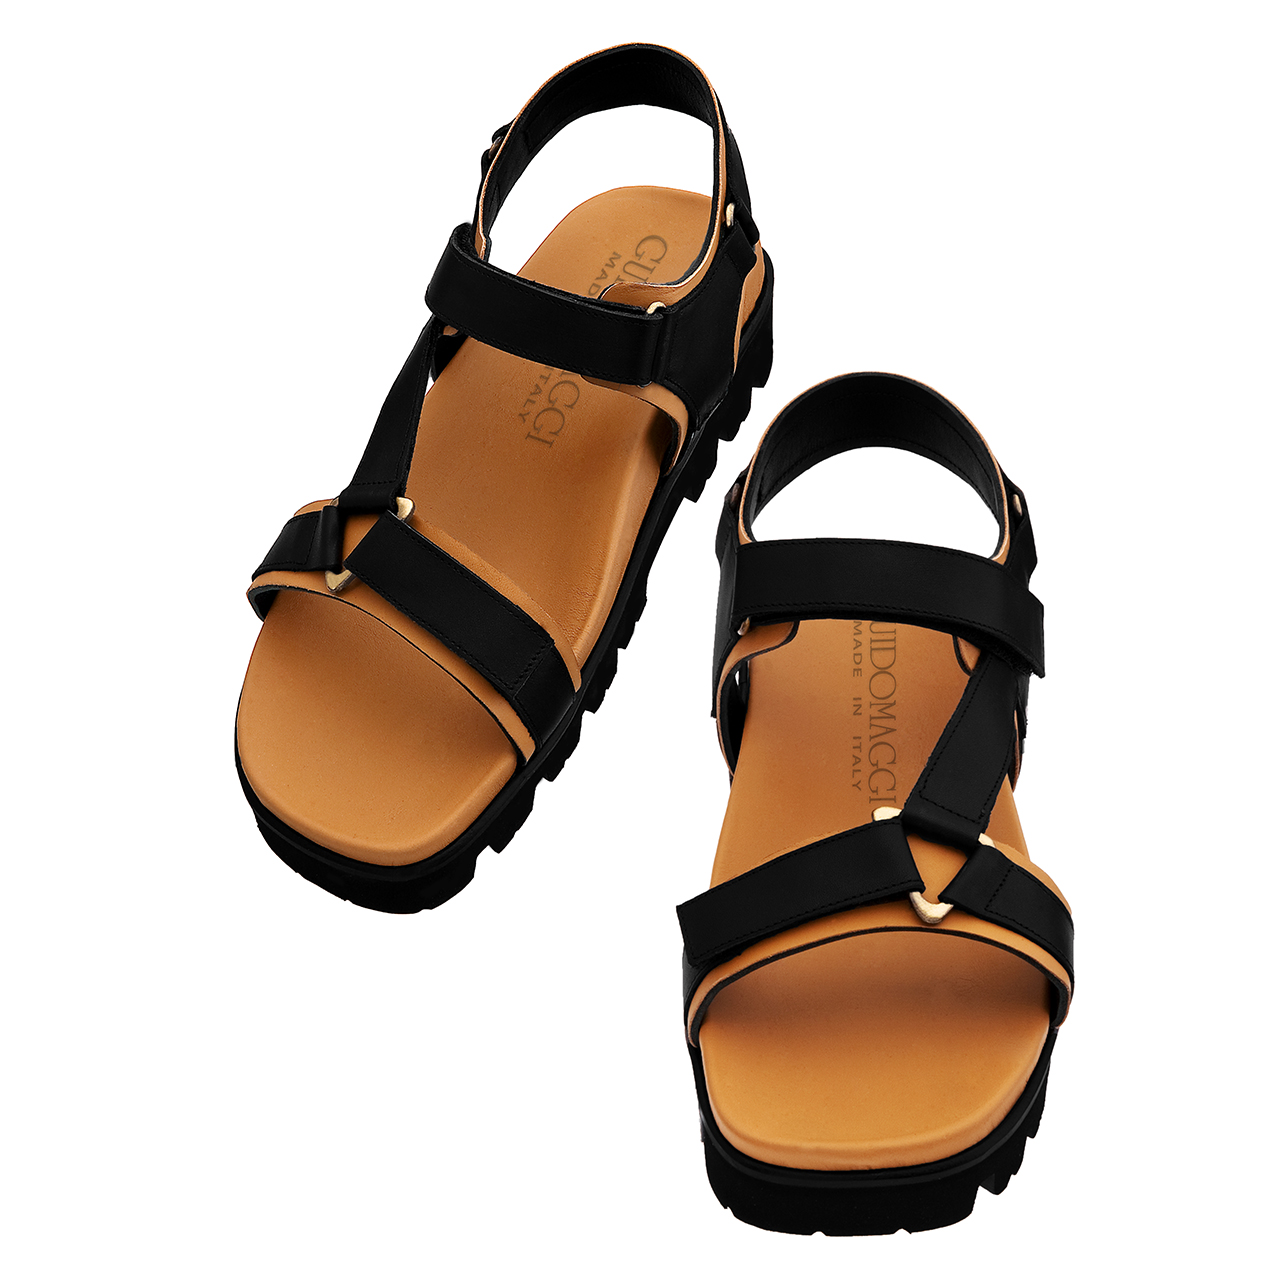 Bora Bora Elevator Sandals - GuidoMaggi Leather